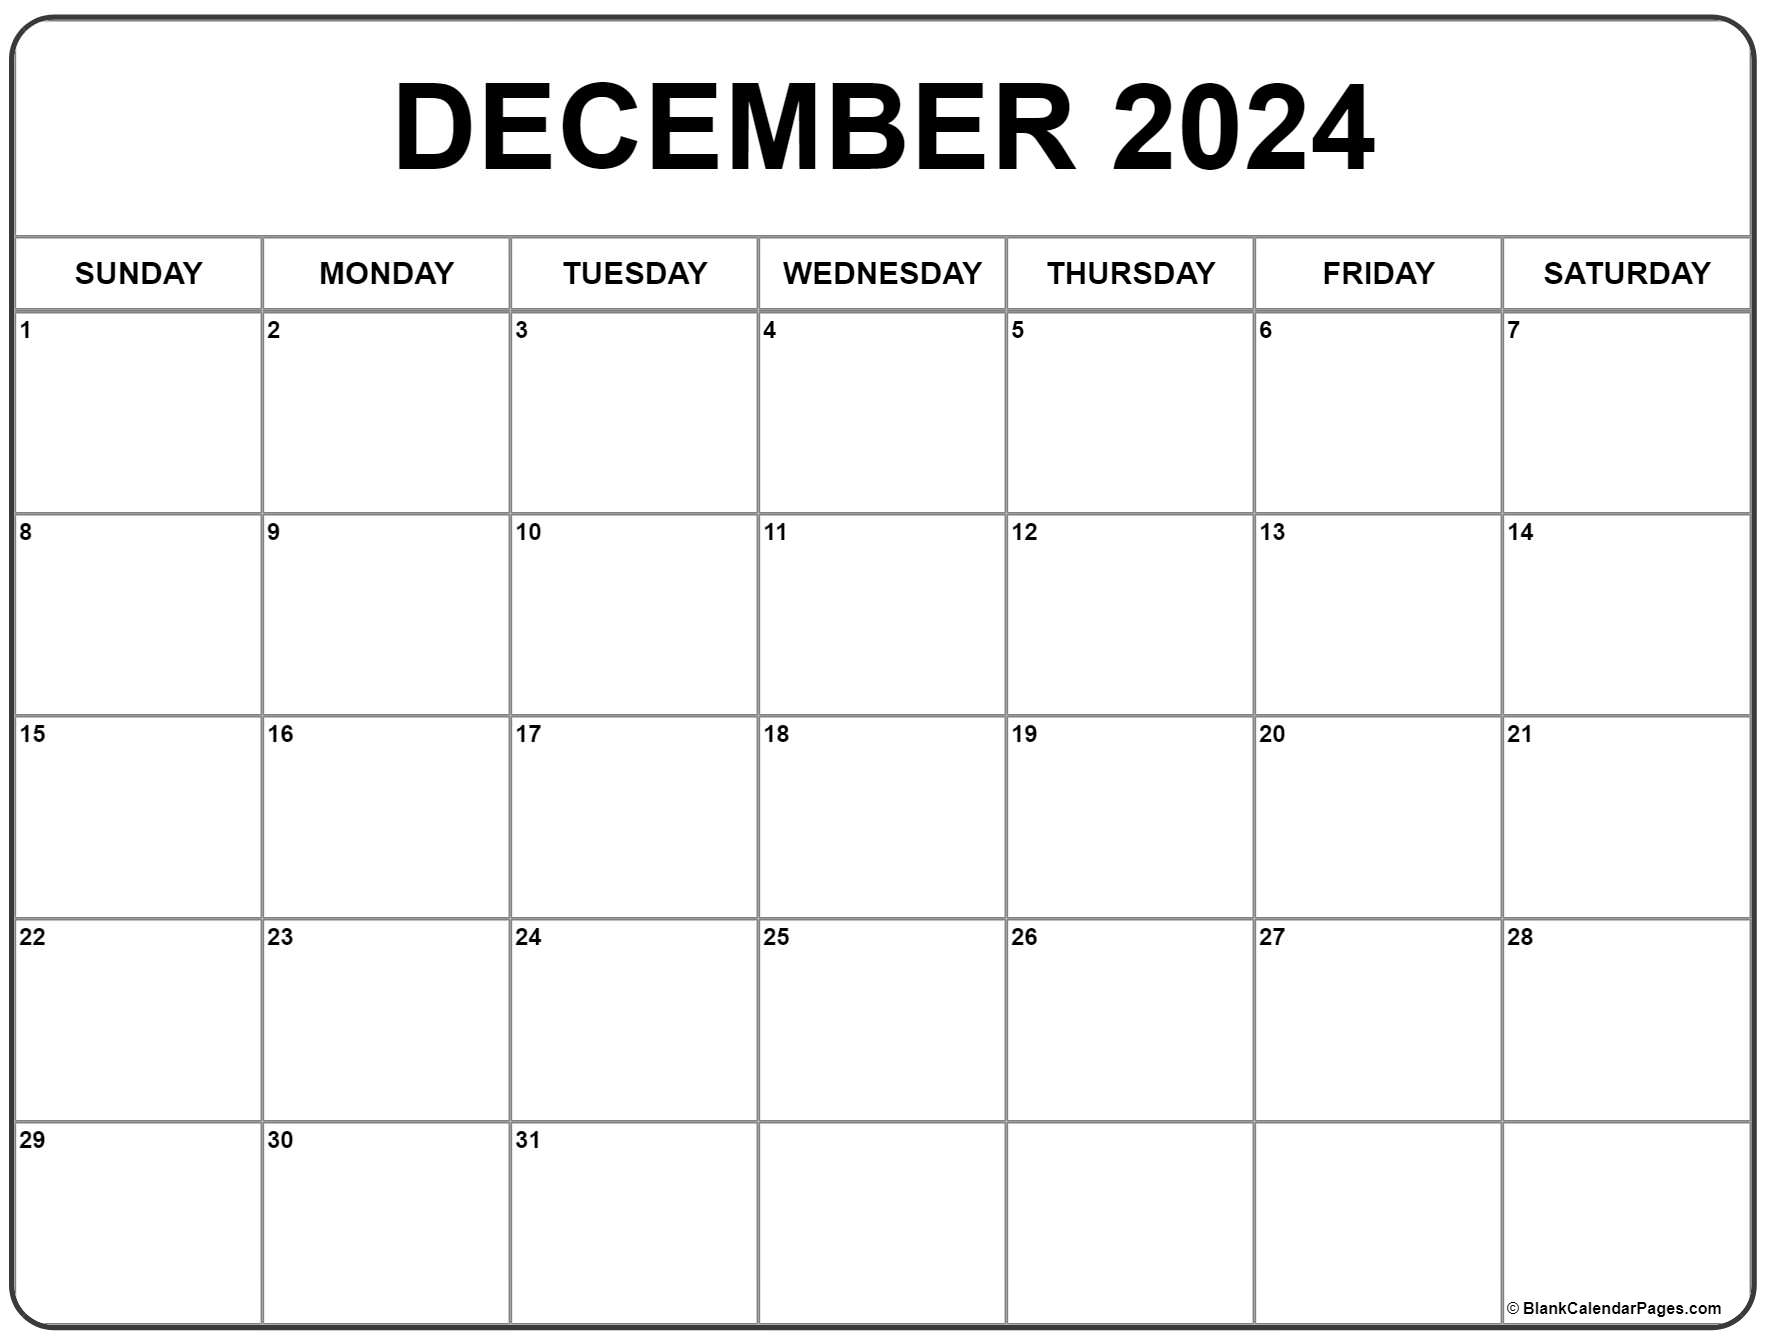 December 2024 Calendar | Free Printable Calendar for December Calendar 2024 Printable